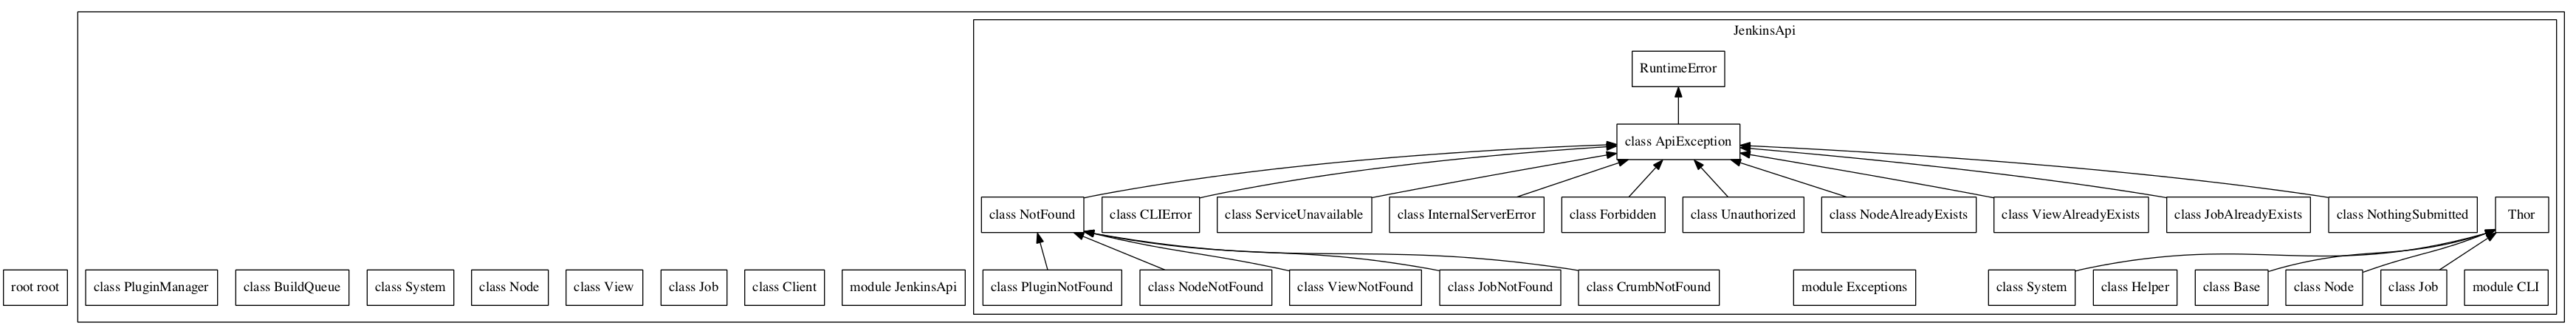 jenkins_api_client_class_diagram.png